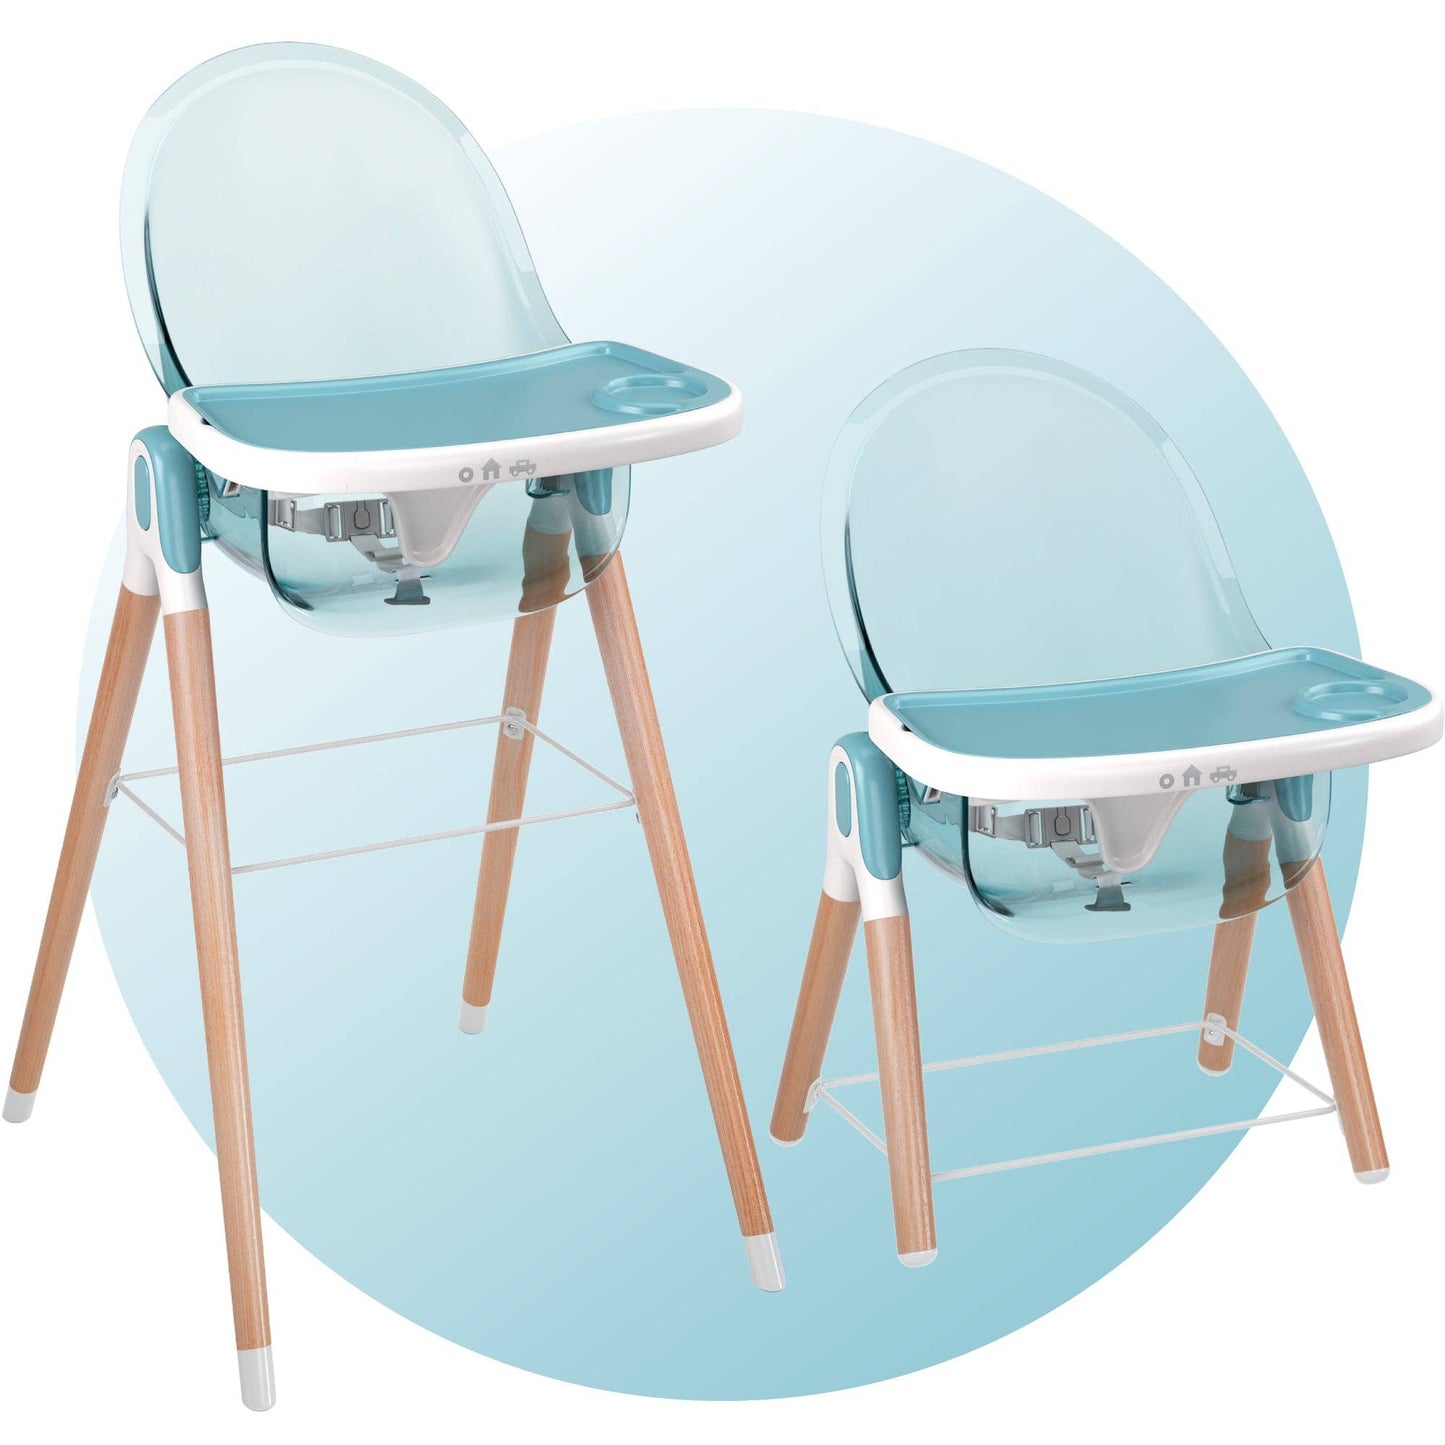 Children of Design 6 in 1 Deluxe High Chair-Blue